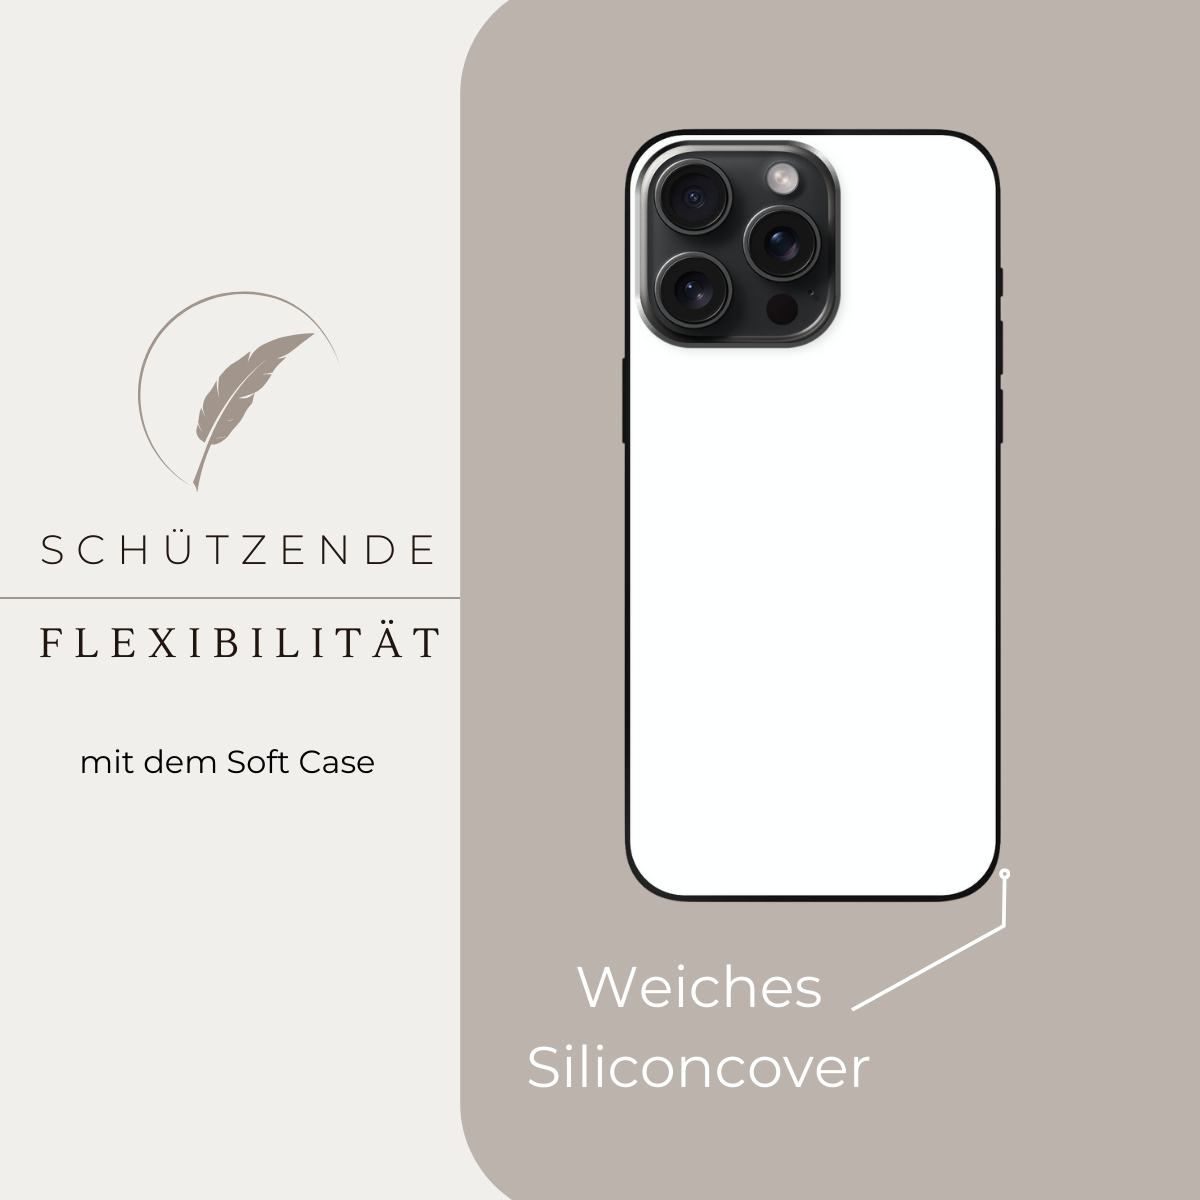 Sicherheit - Believe in yourself - iPhone 11 Handyhülle